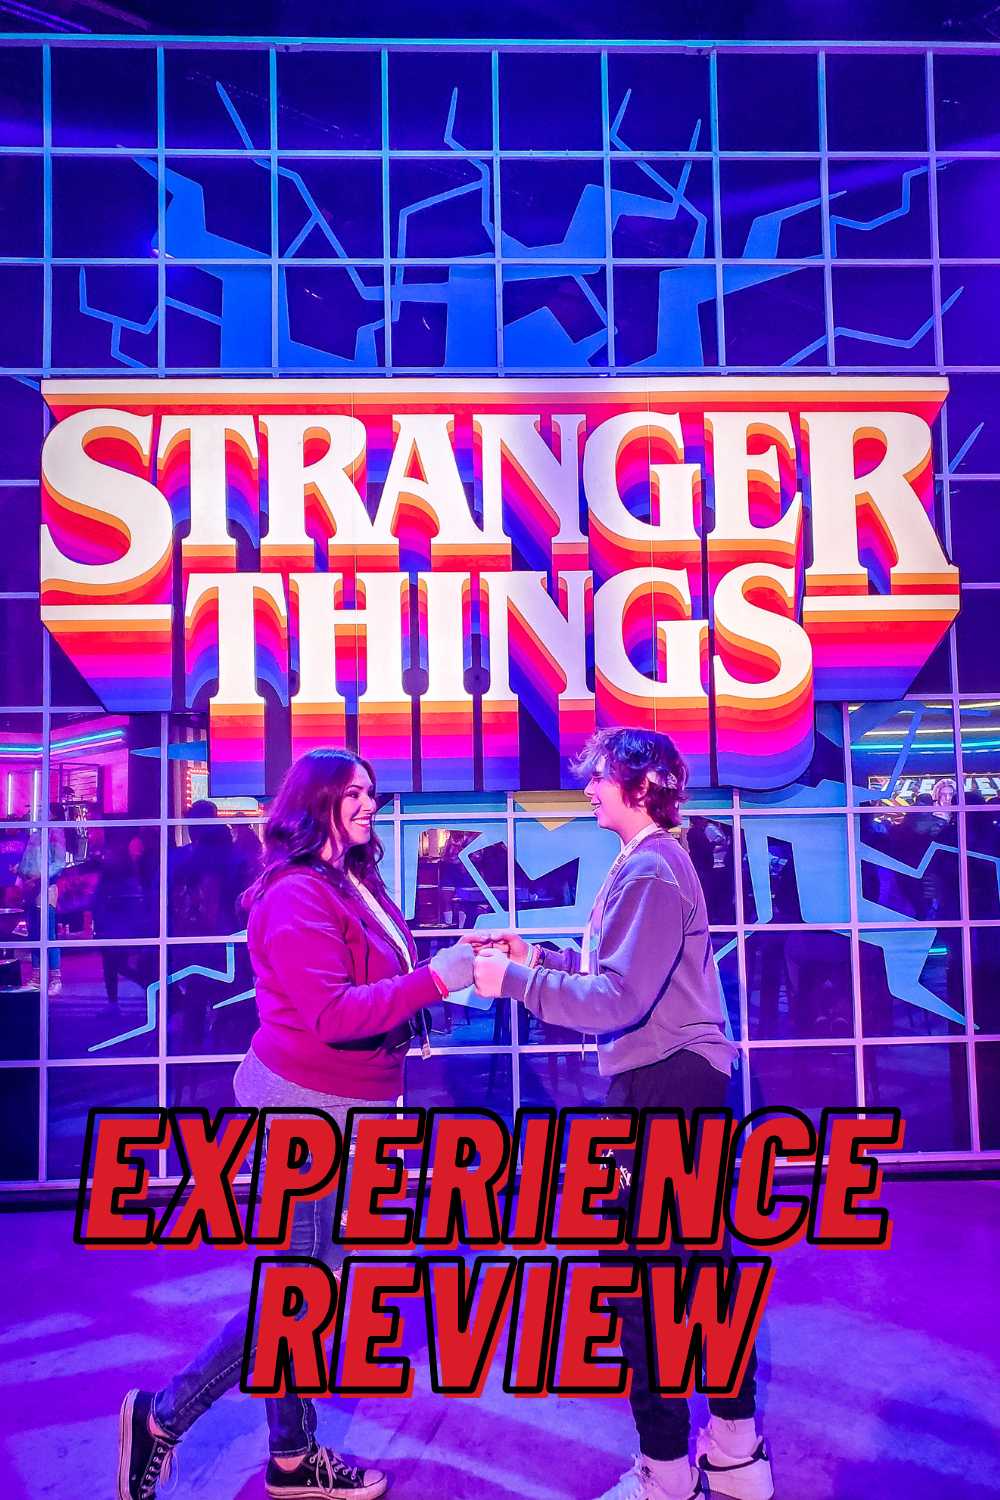 Stranger Things Experience Review, Atlanta, Los Angeles, Reviews